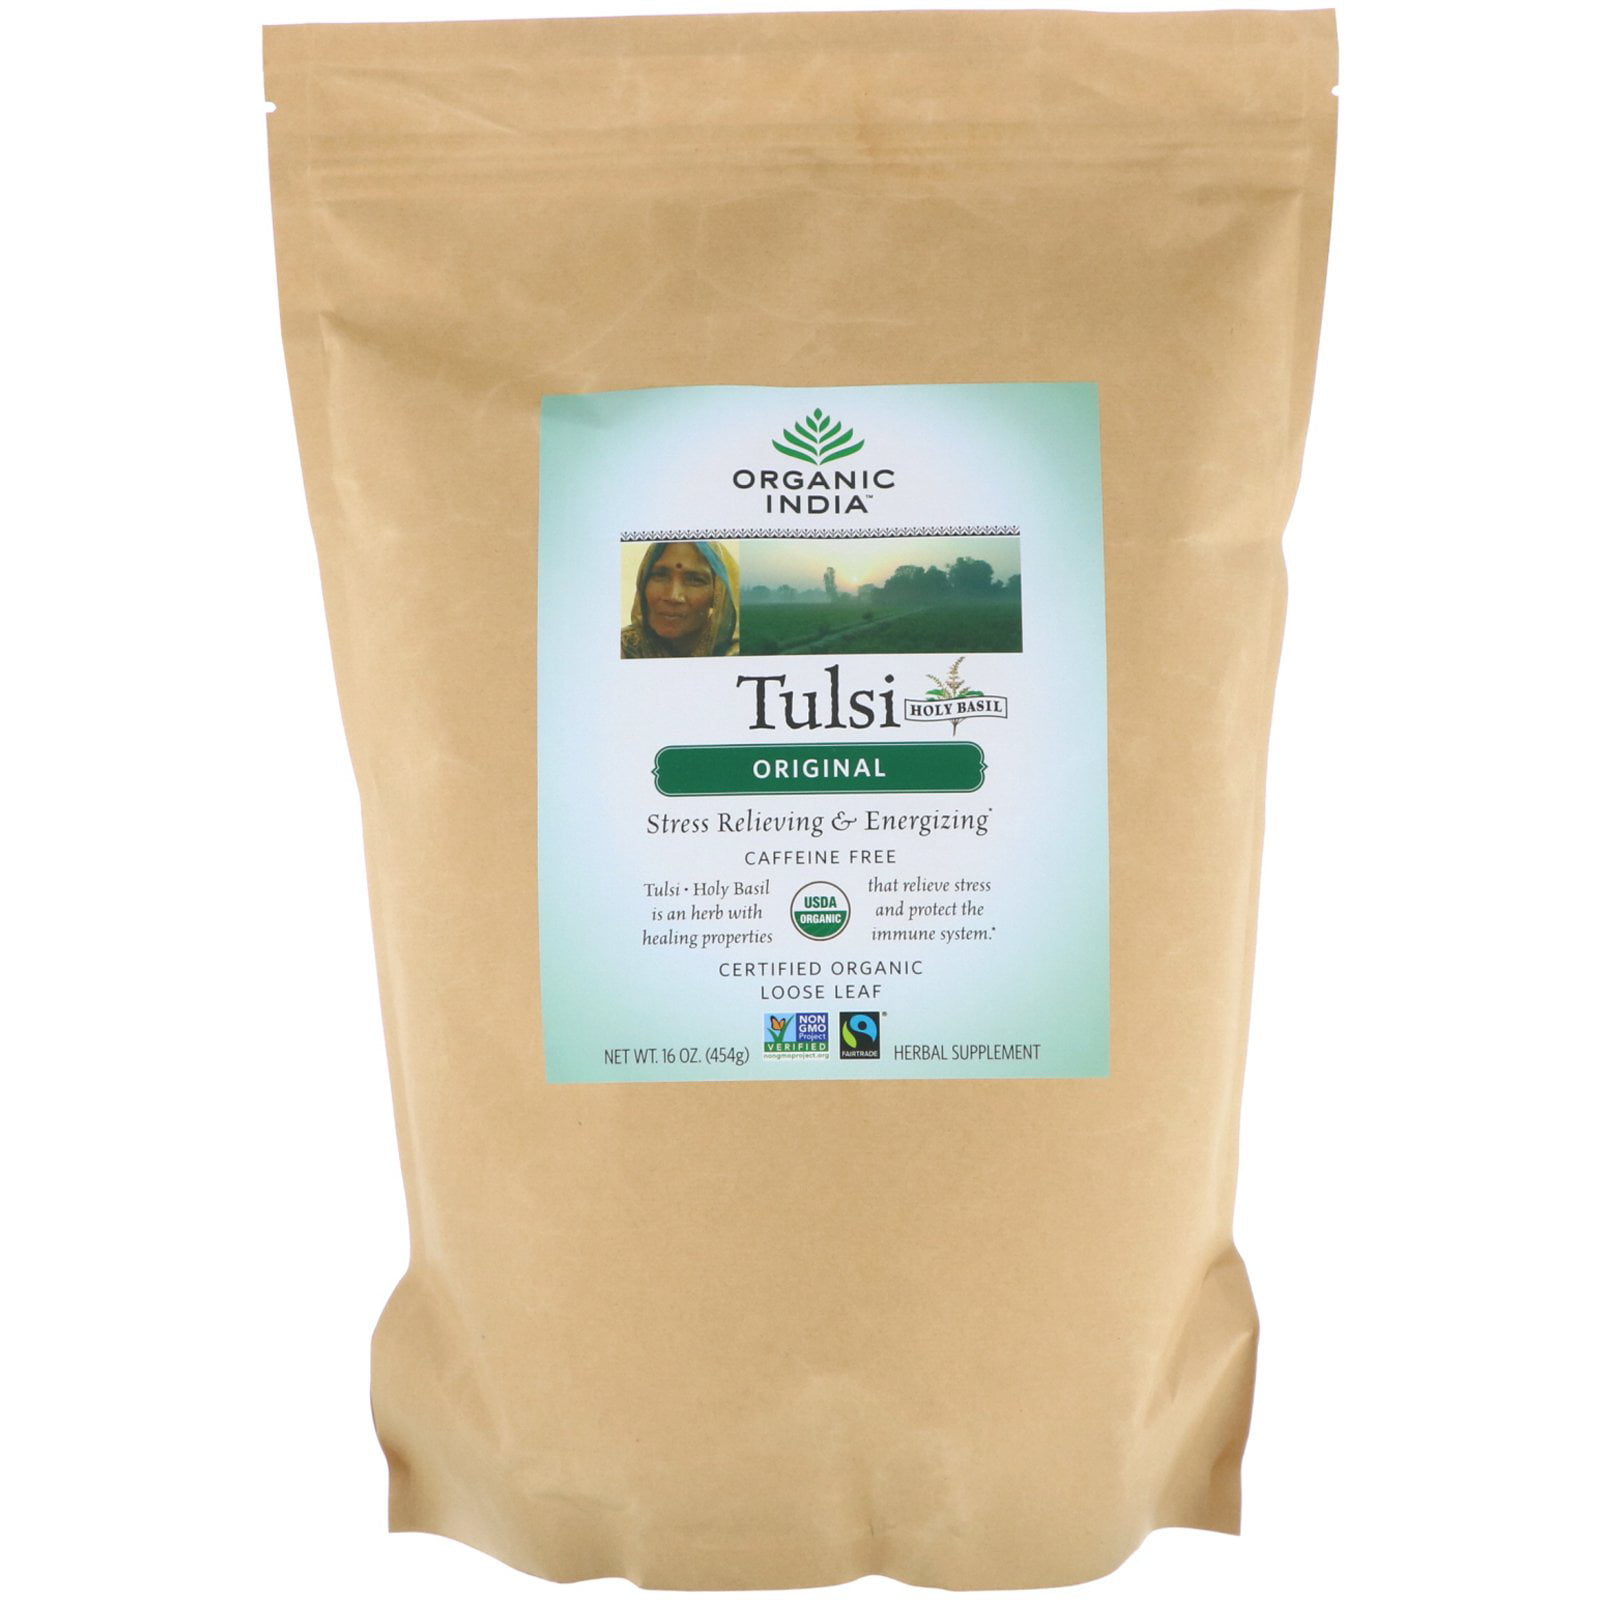 Tulsi Loose Leaf Tea, Original, CaffeineFree, 16 oz (454 g), Organic